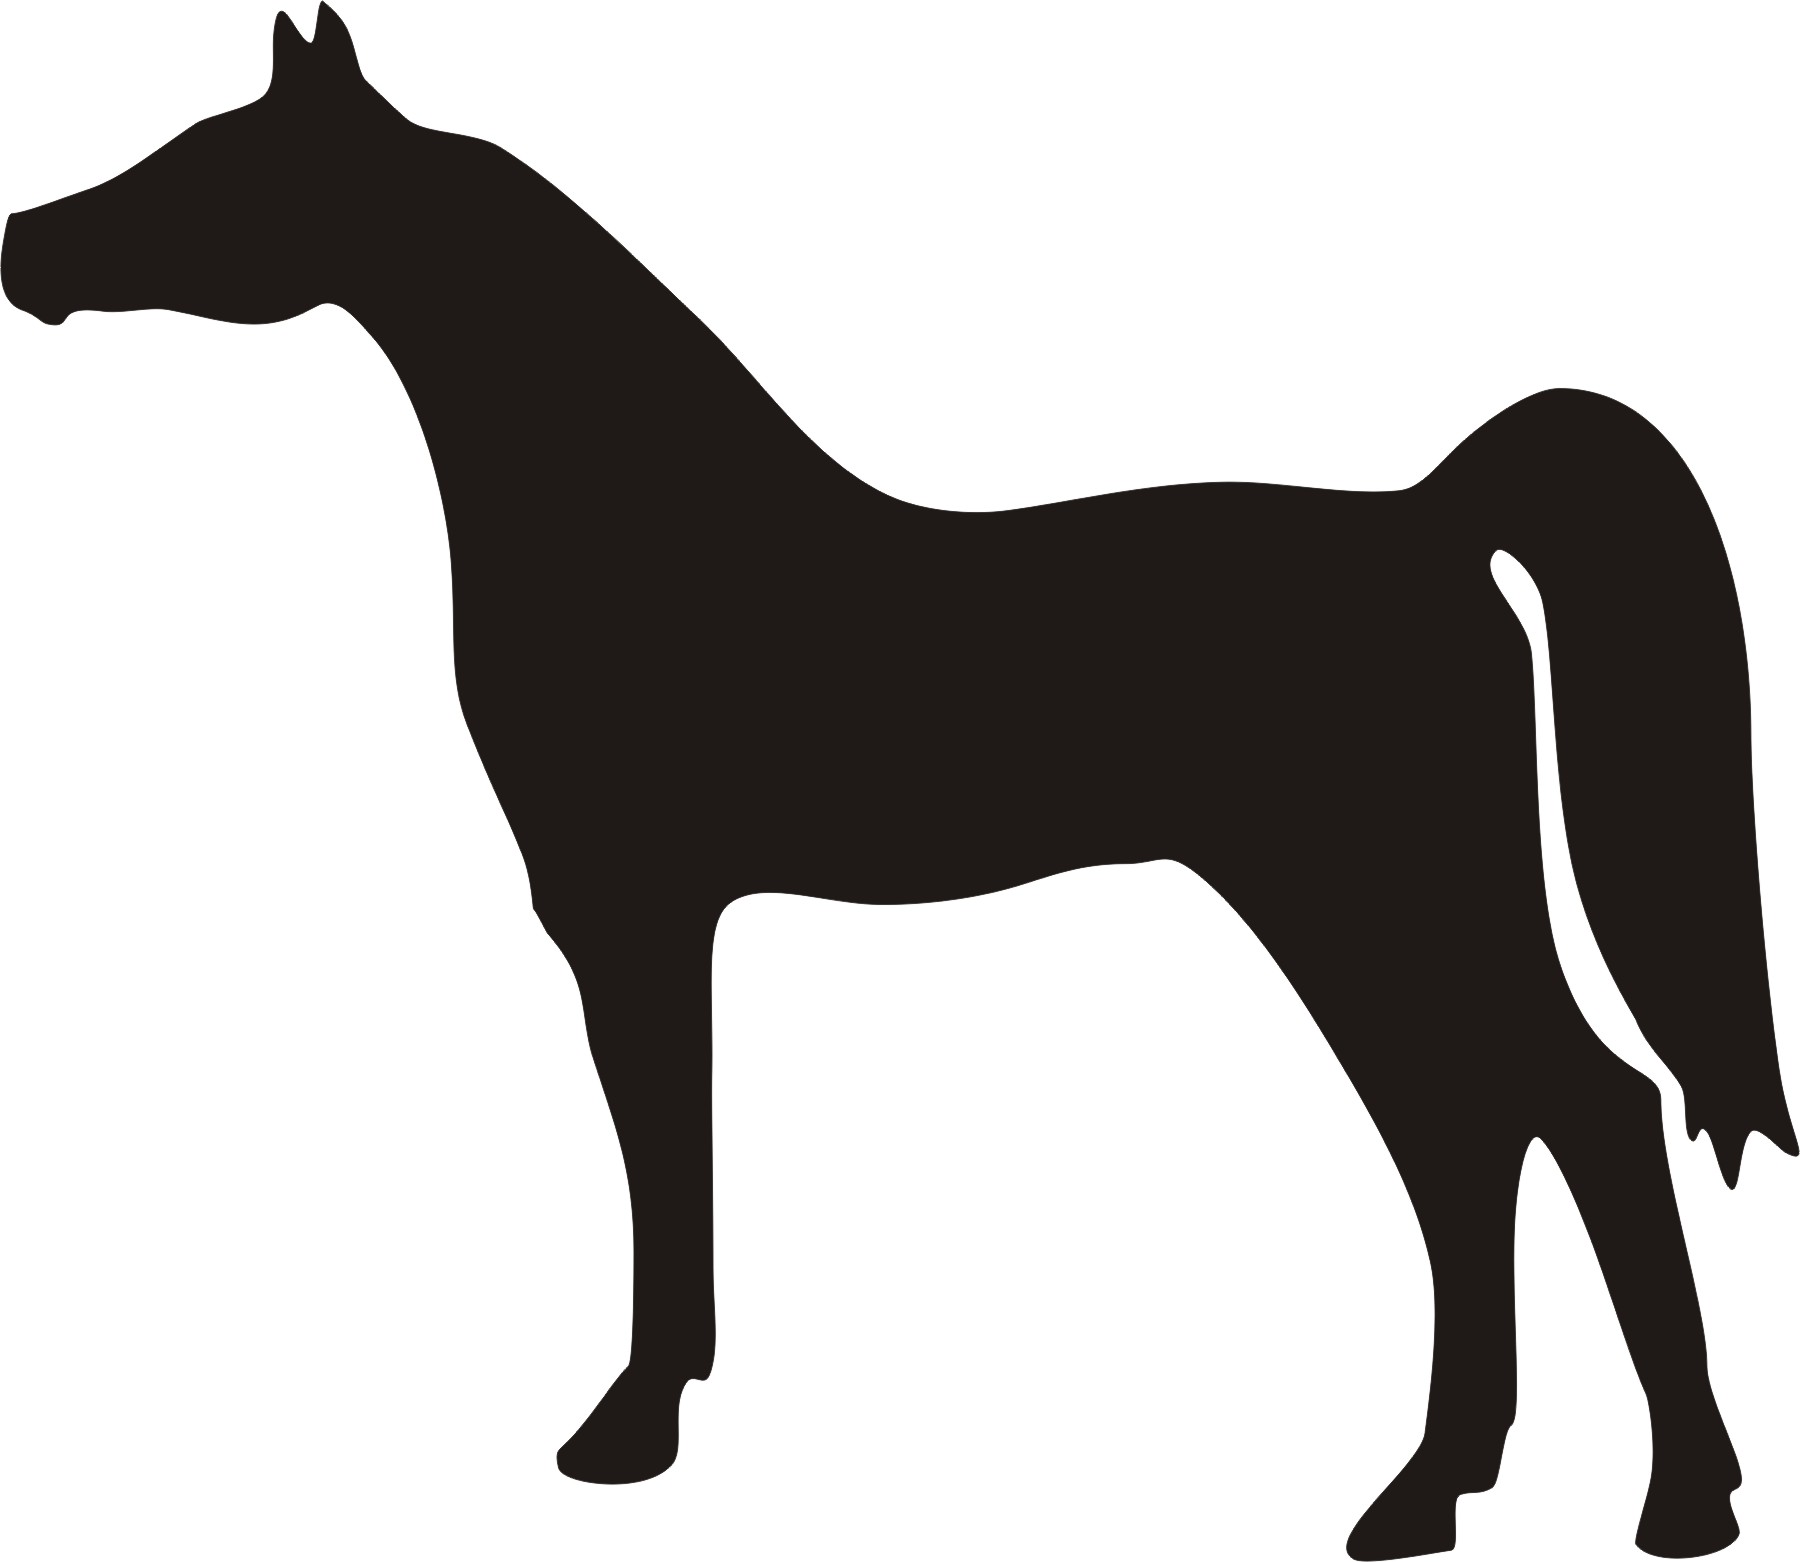 Horse Silhouette Clipart